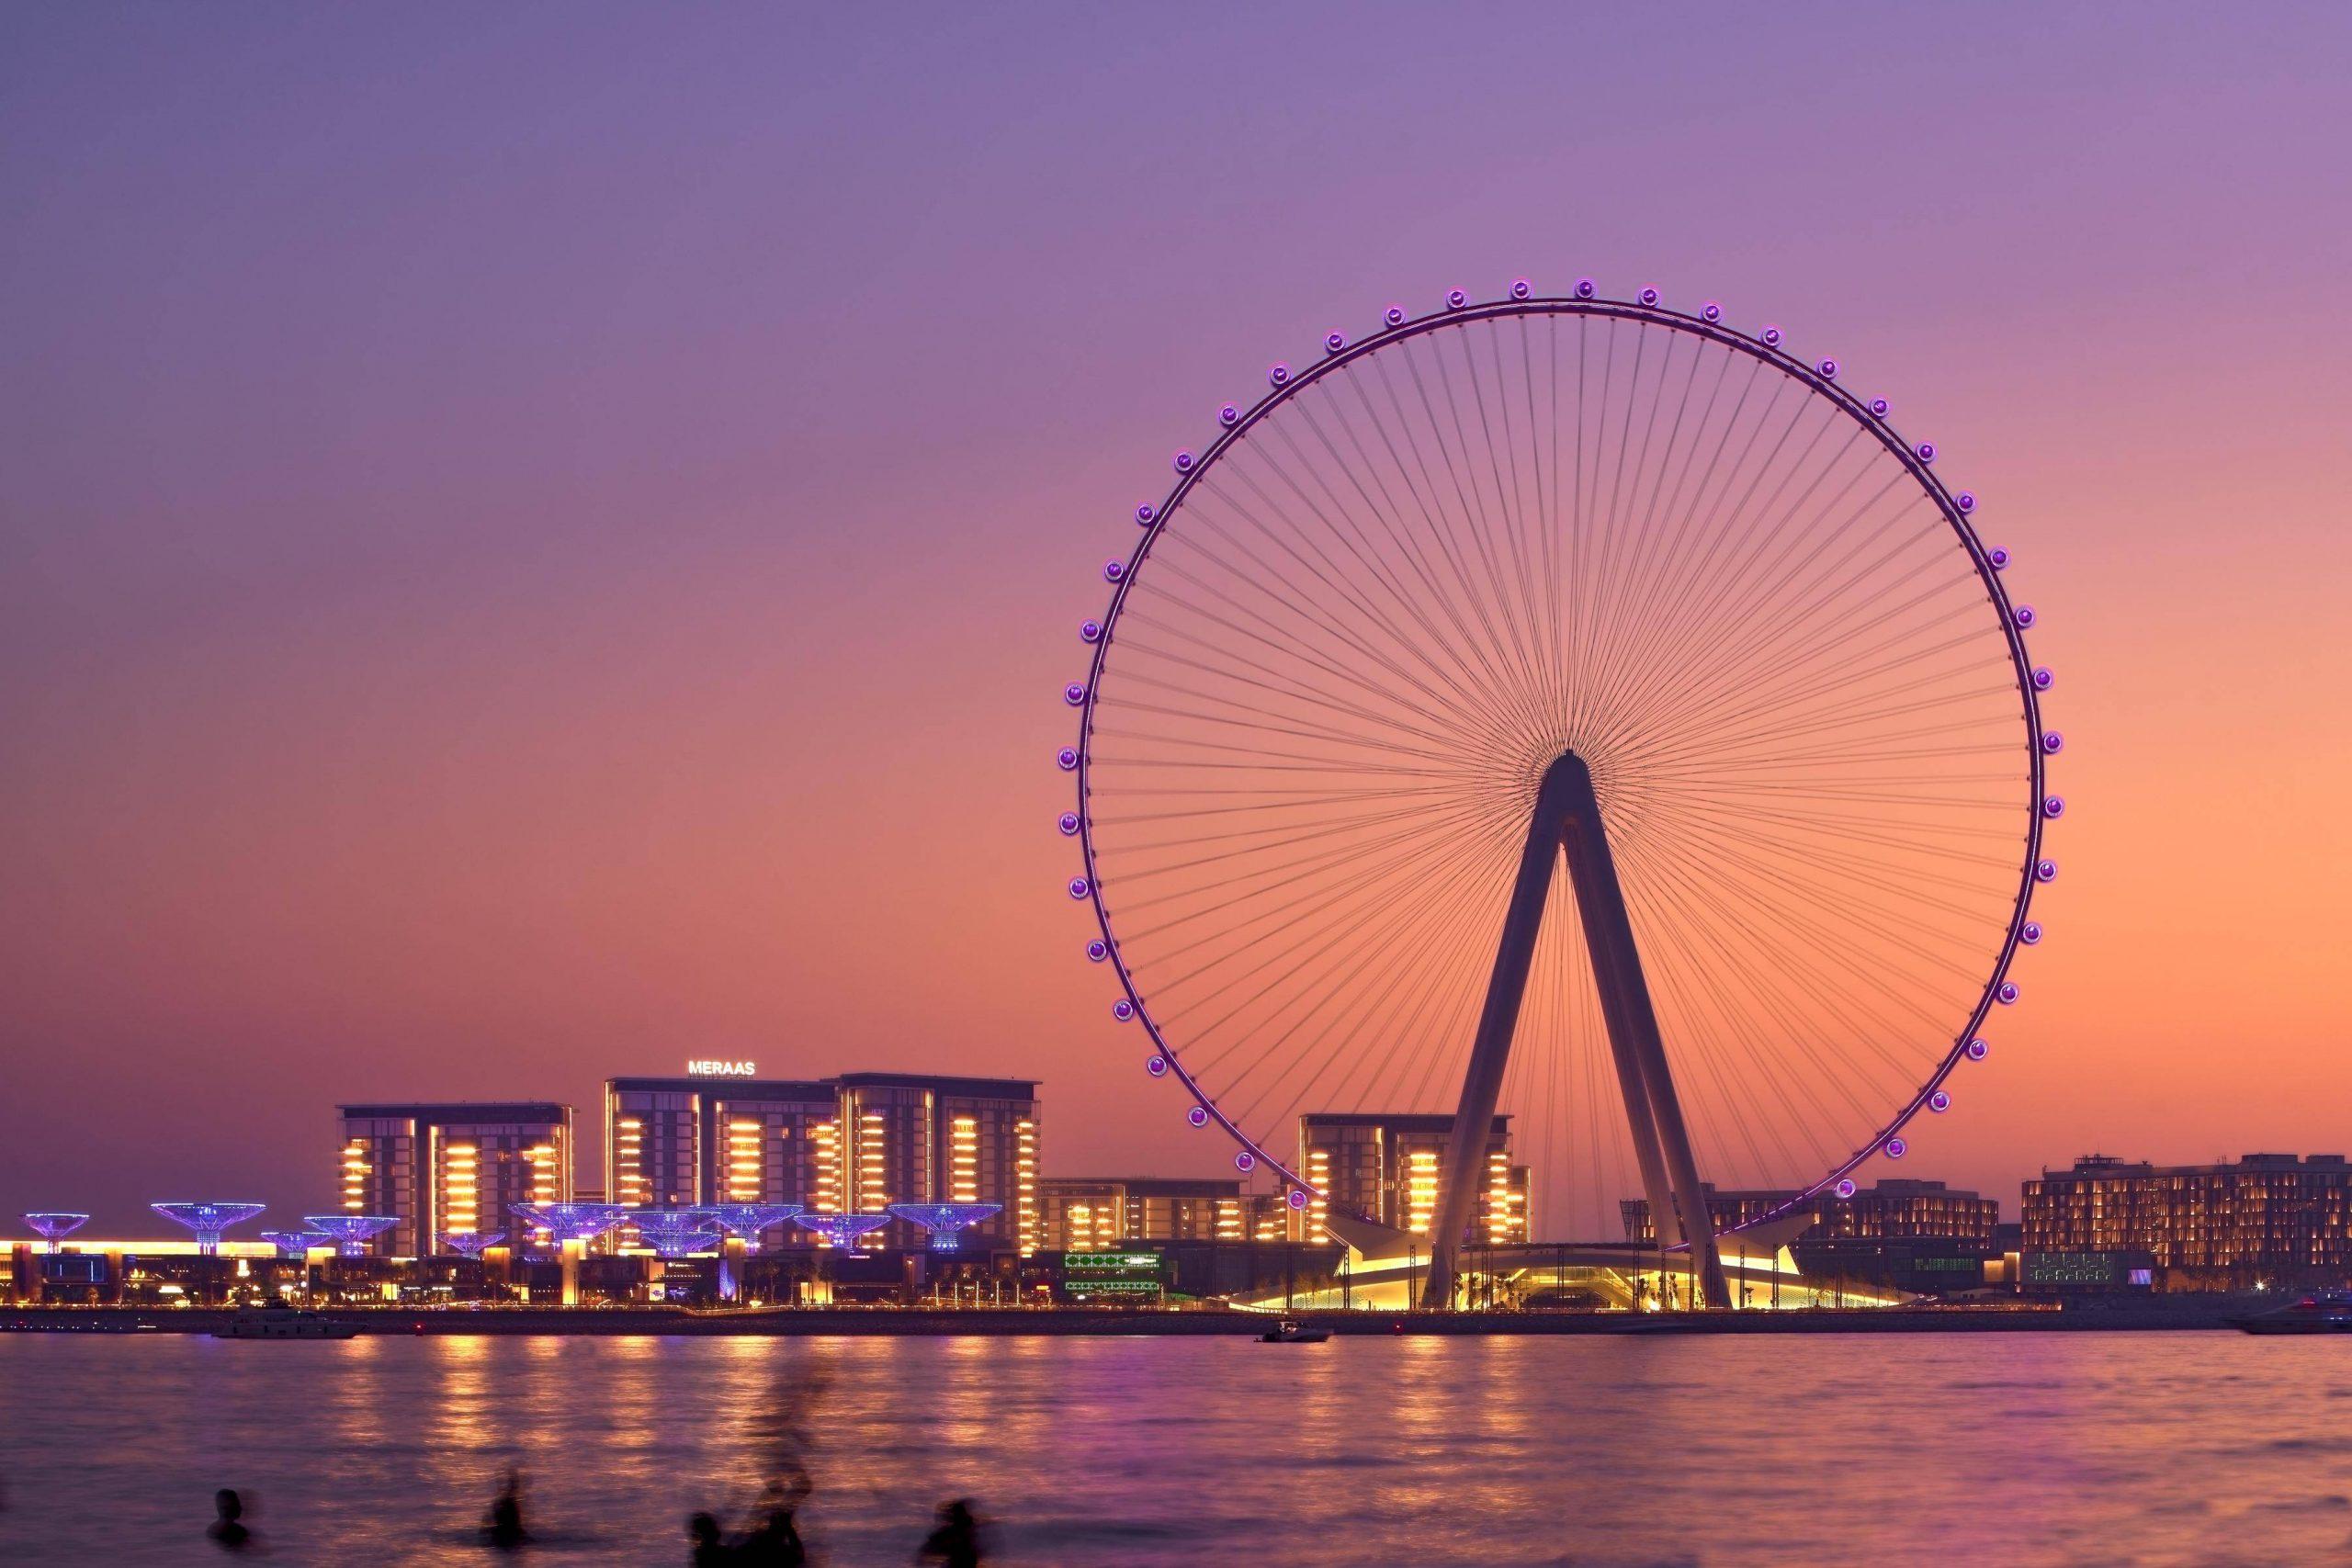 UAE announces the world's tallest observation wheel 'Ain Dubai'